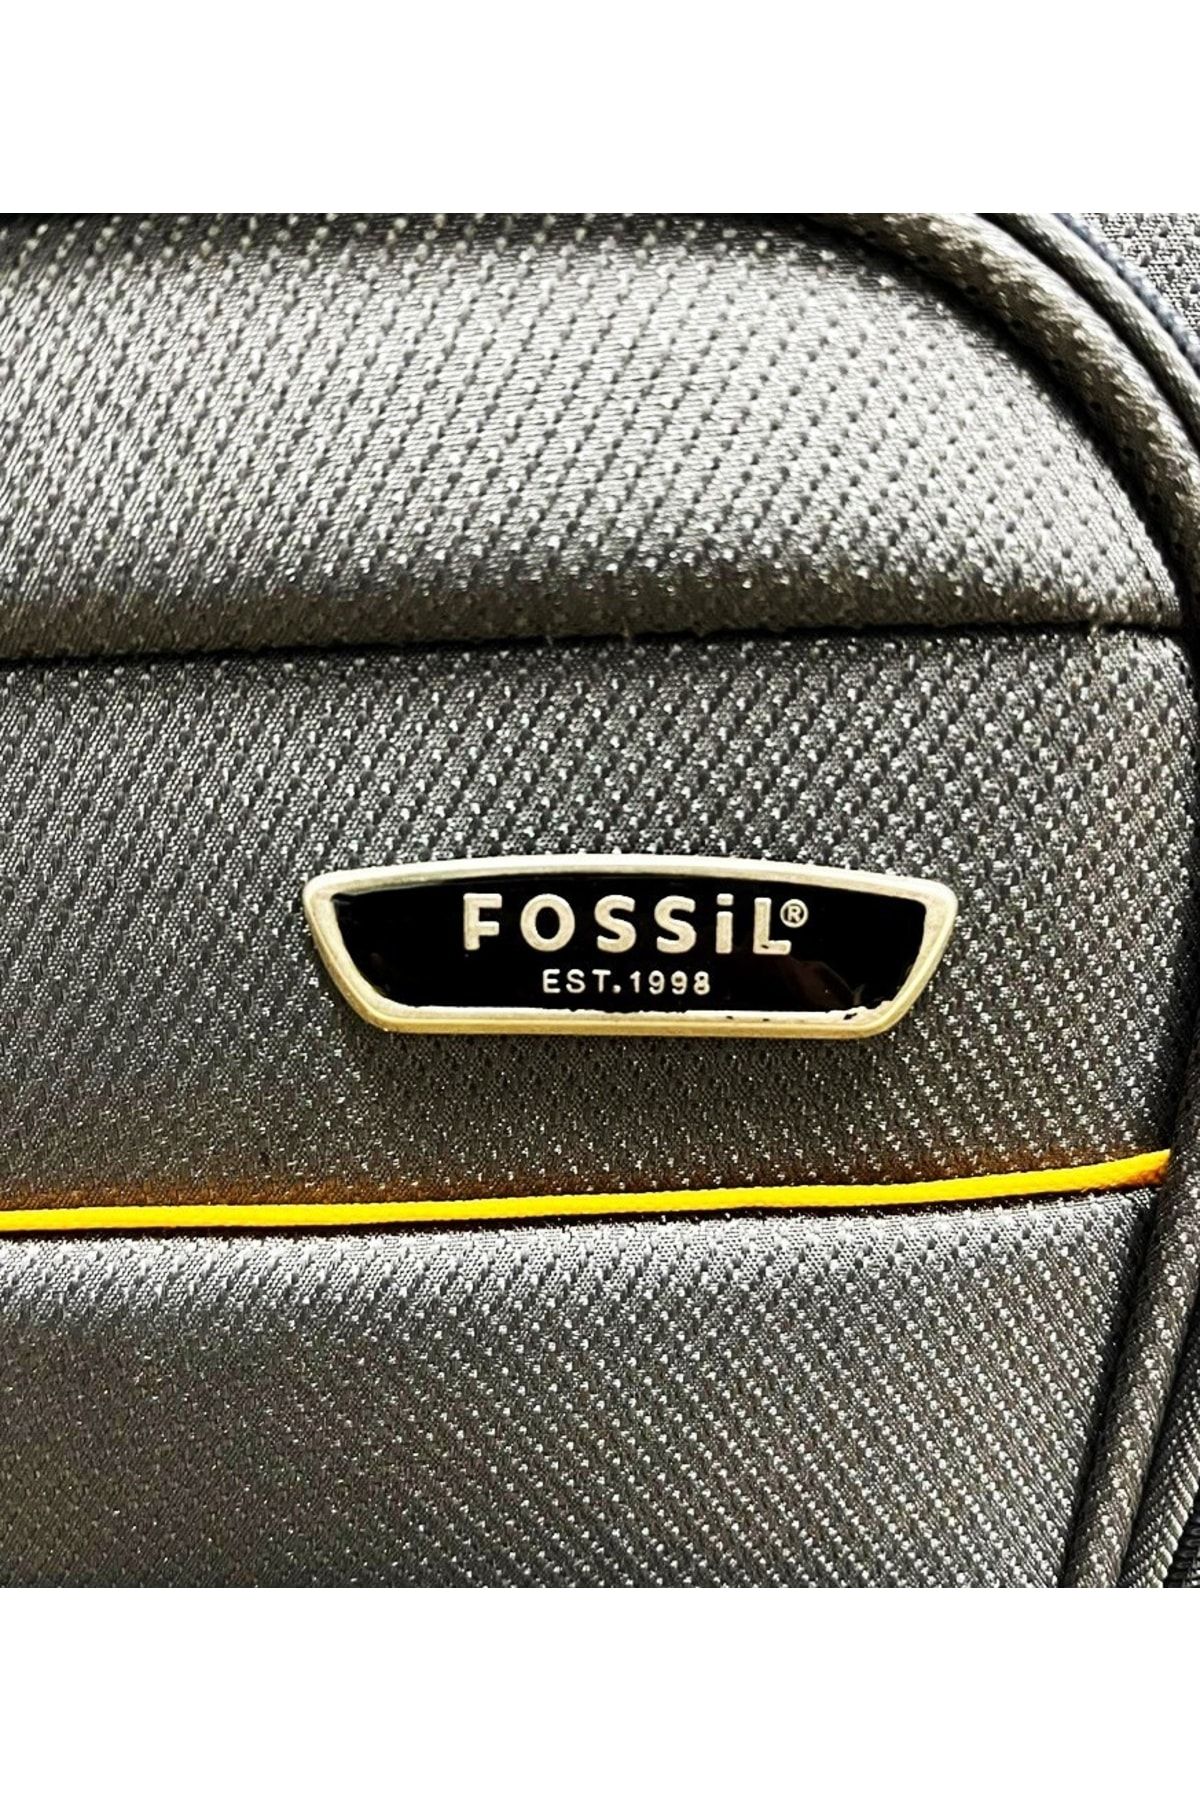 Fossil چمدان پارچه ای با اندازه کوچک 013-VK